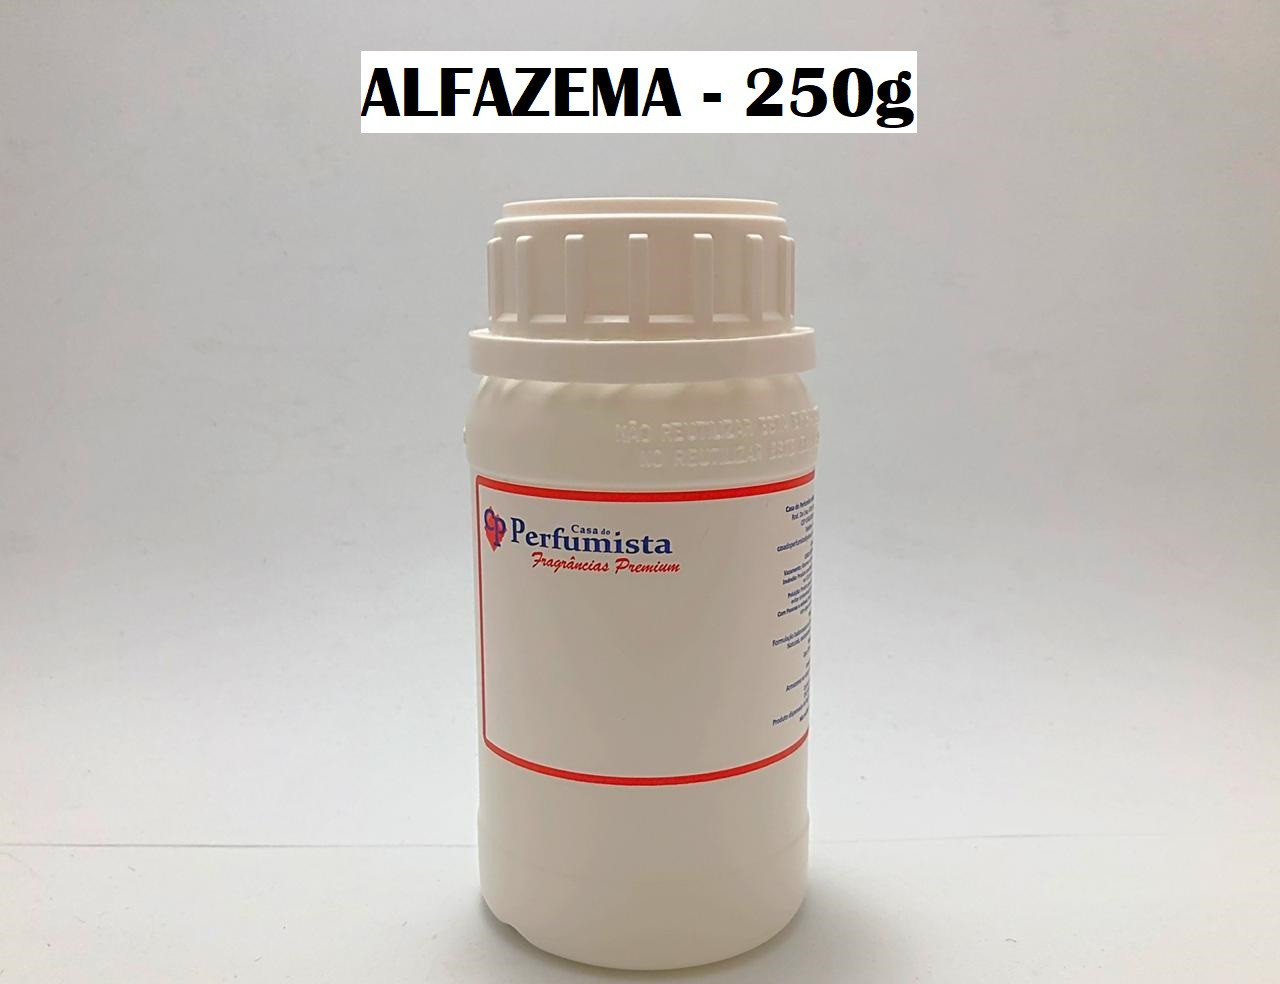 ALFAZEMA - 250g